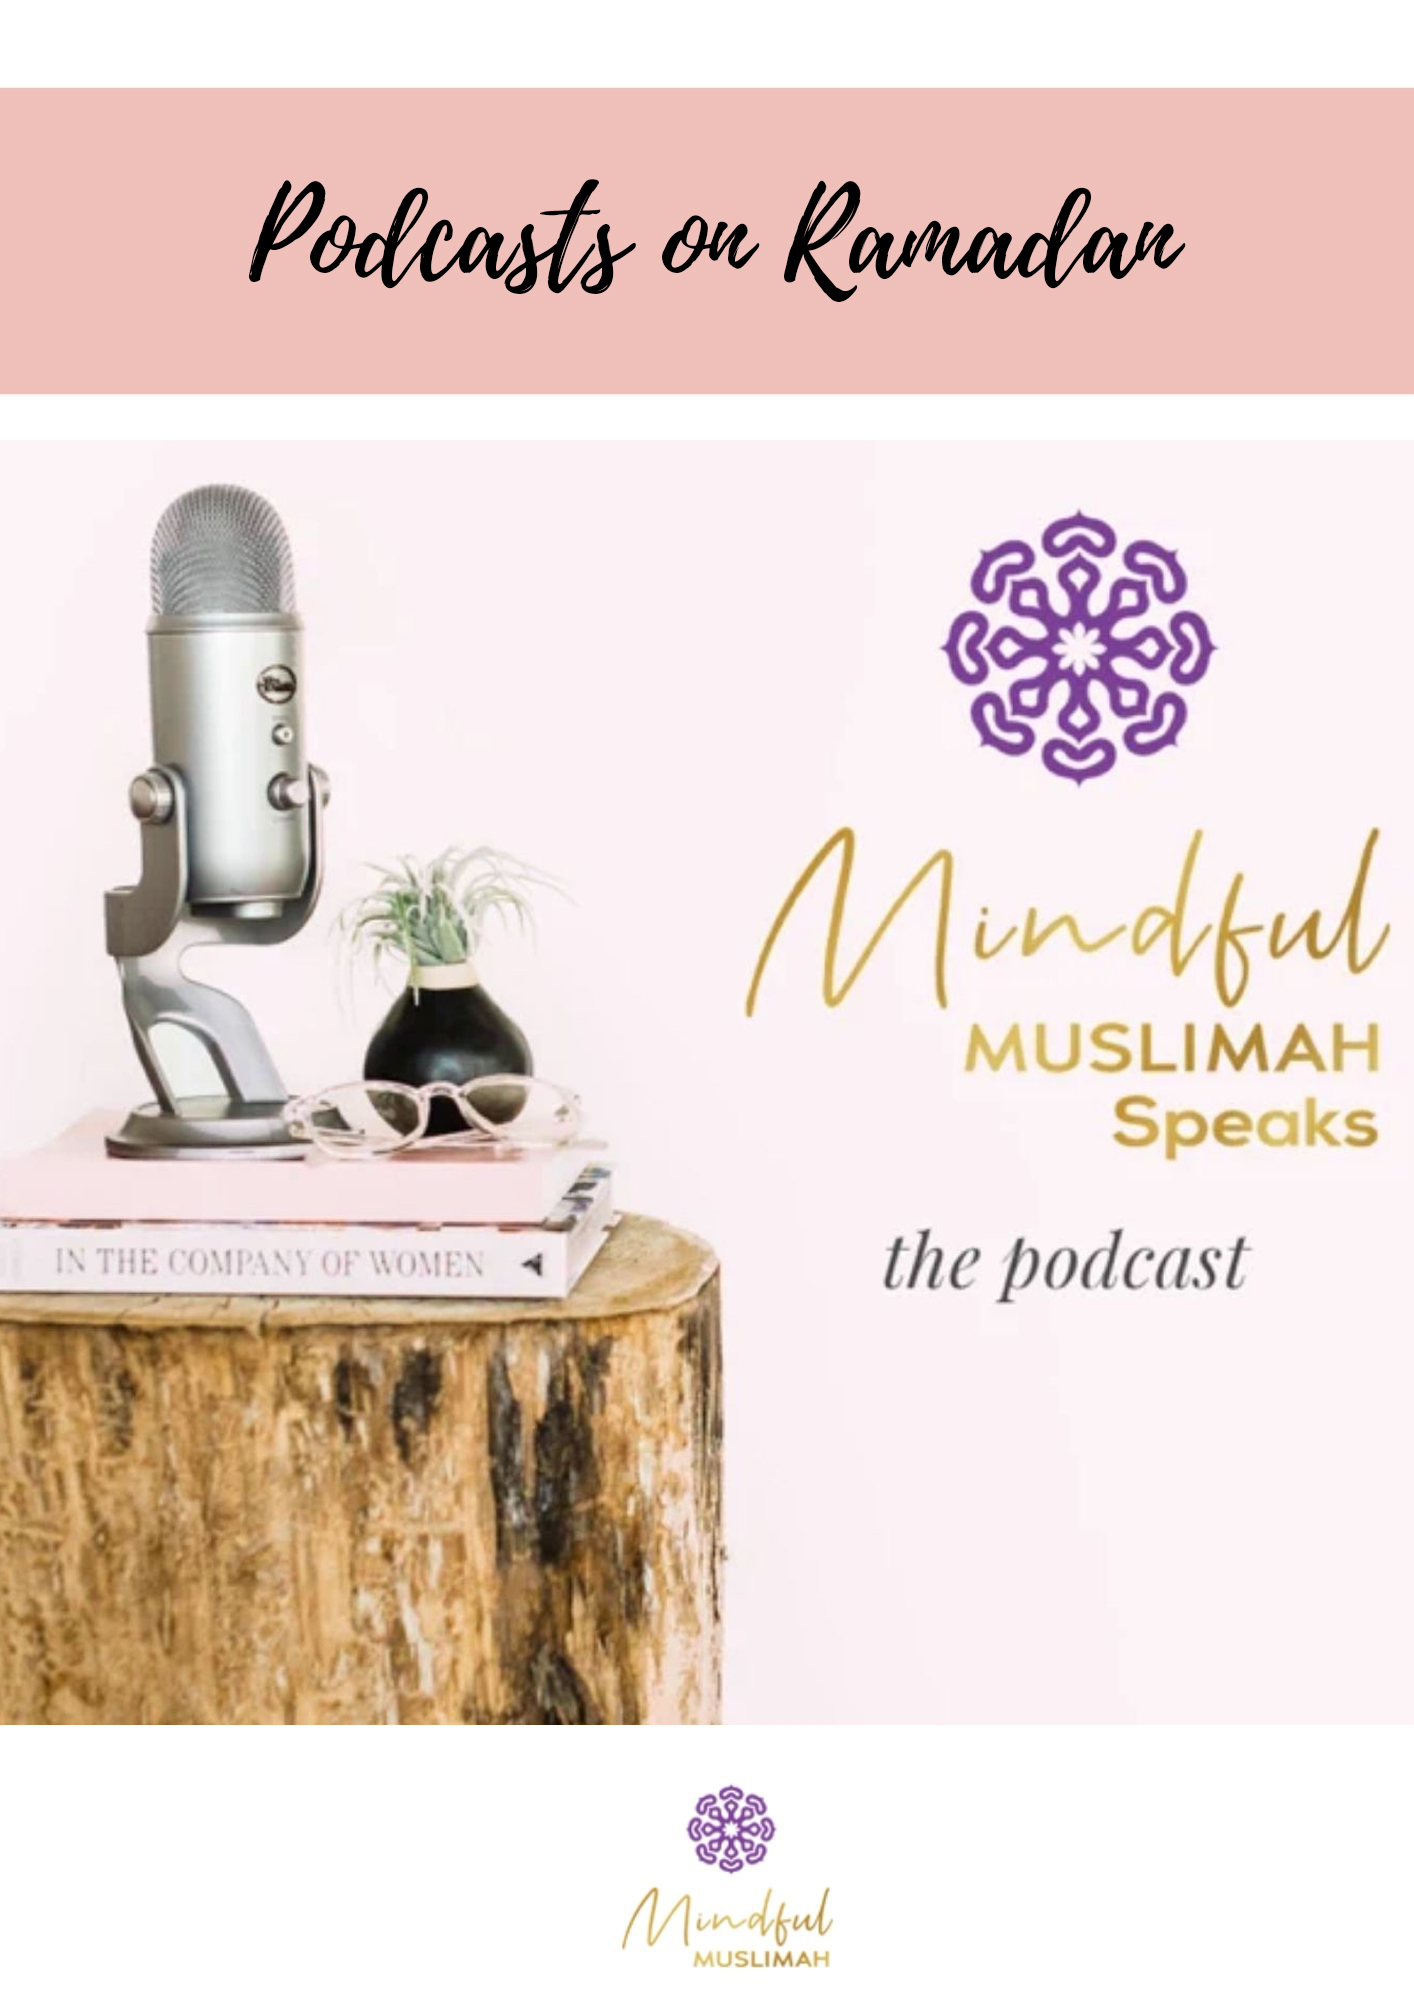 podcast on ramadan